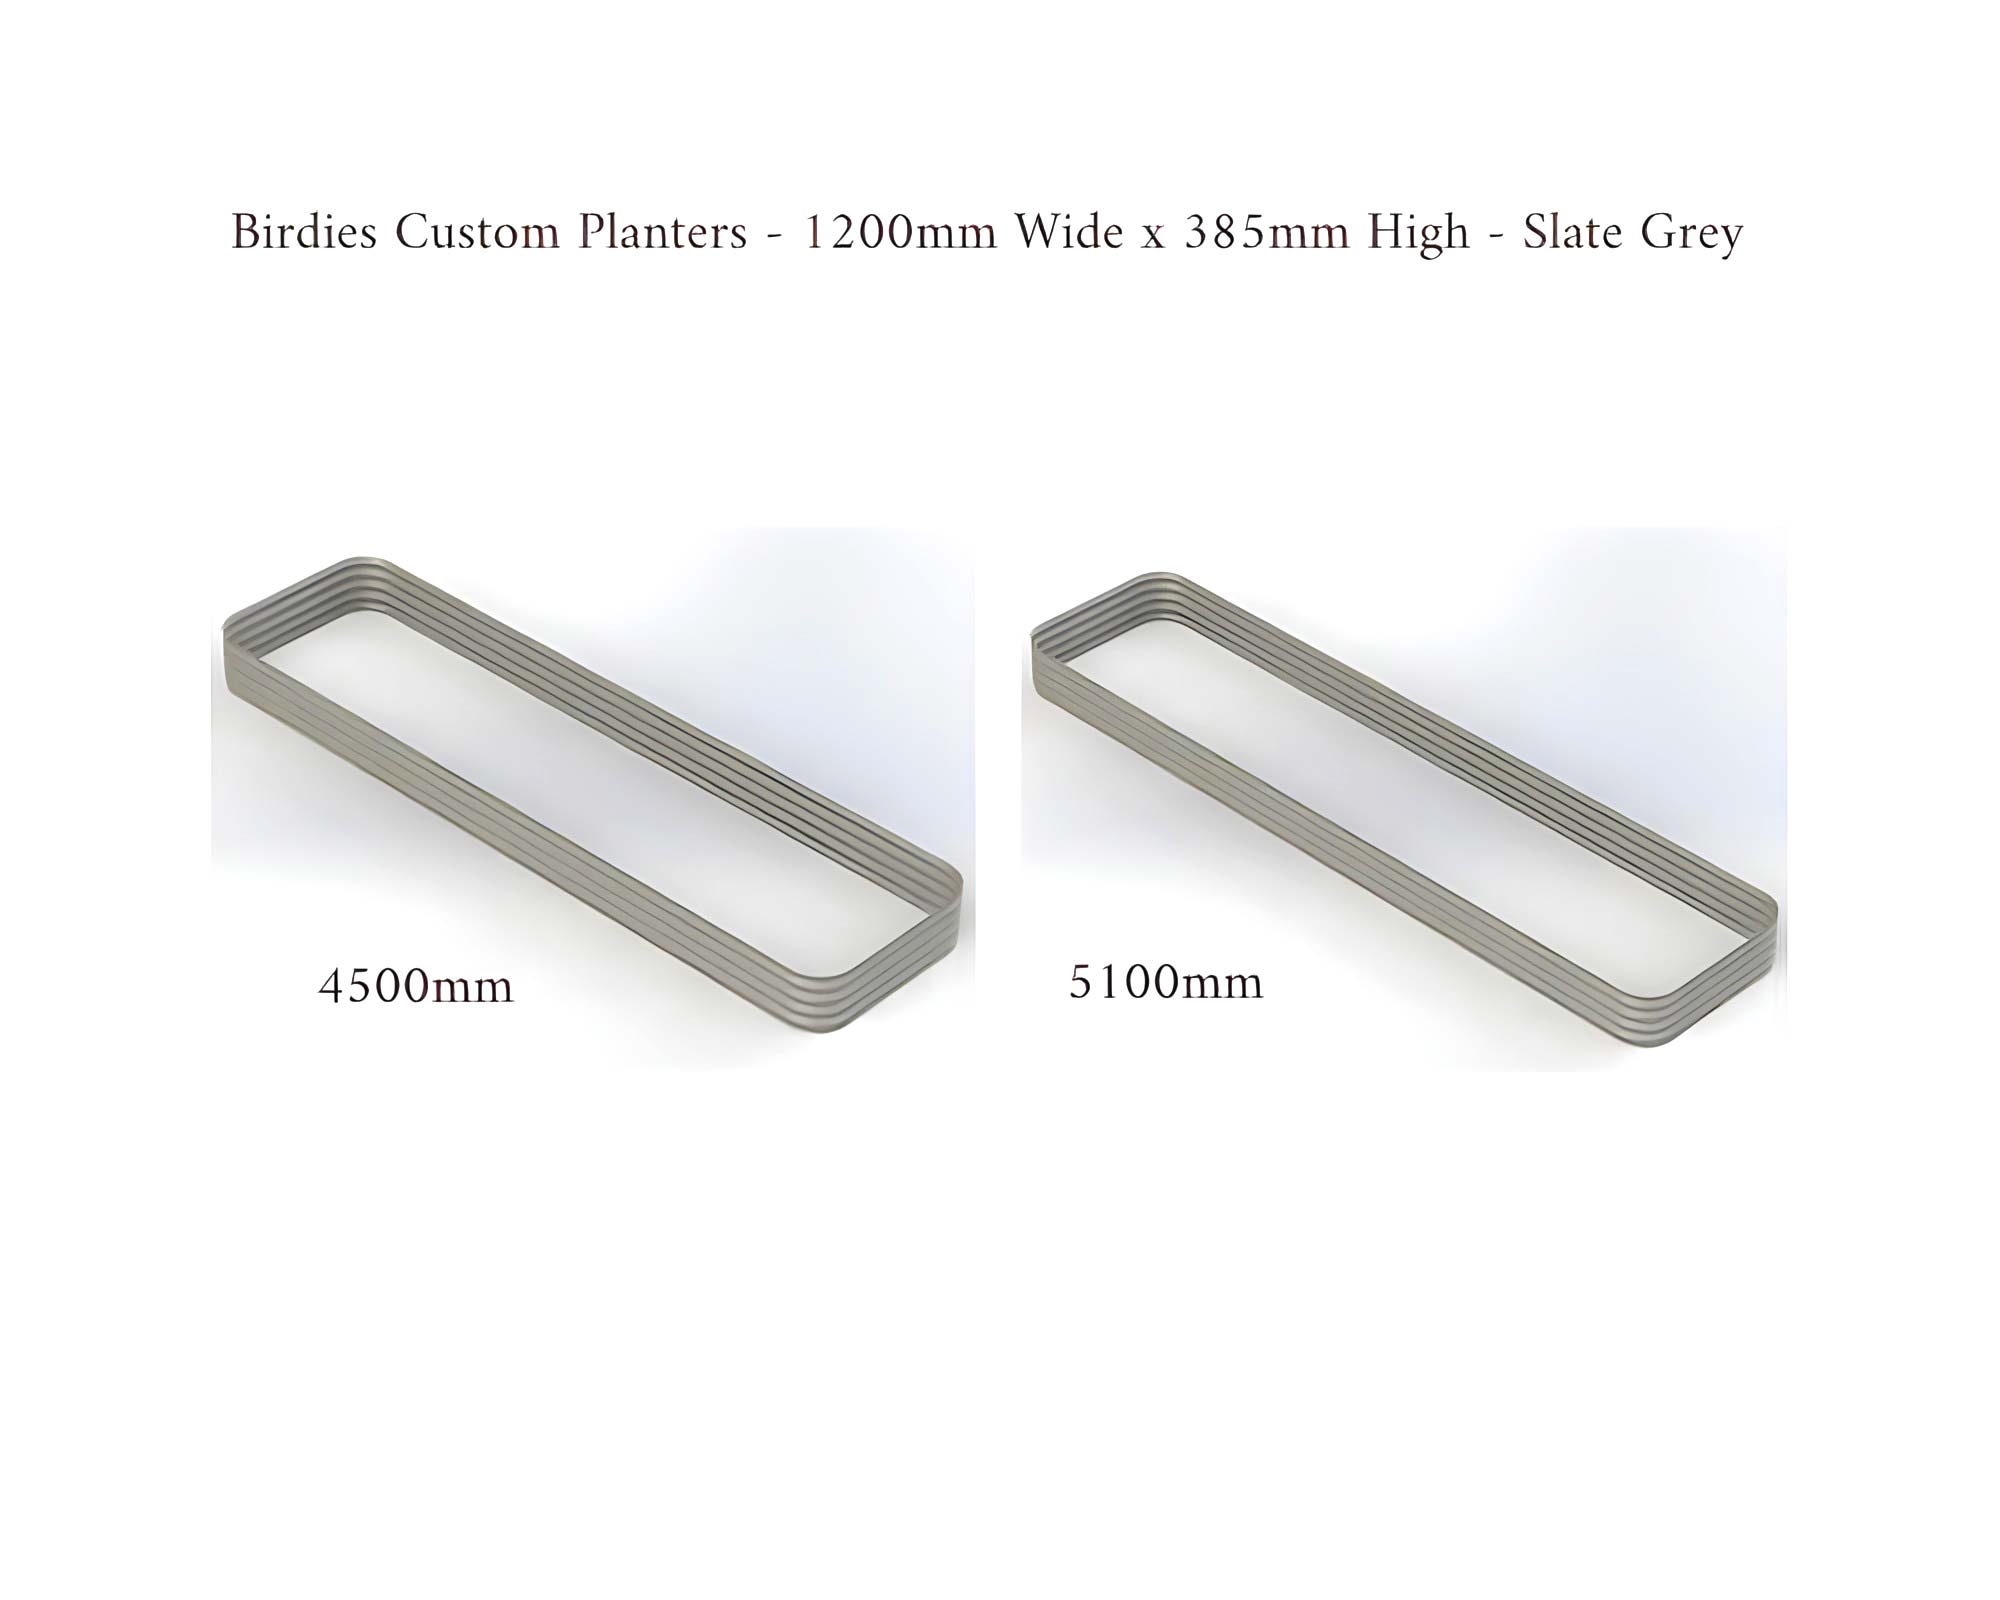 Birdies Custom Planters - 1200mm Wide x 385mm High - Lengths: 4500mm, 5100mm - Slate Grey